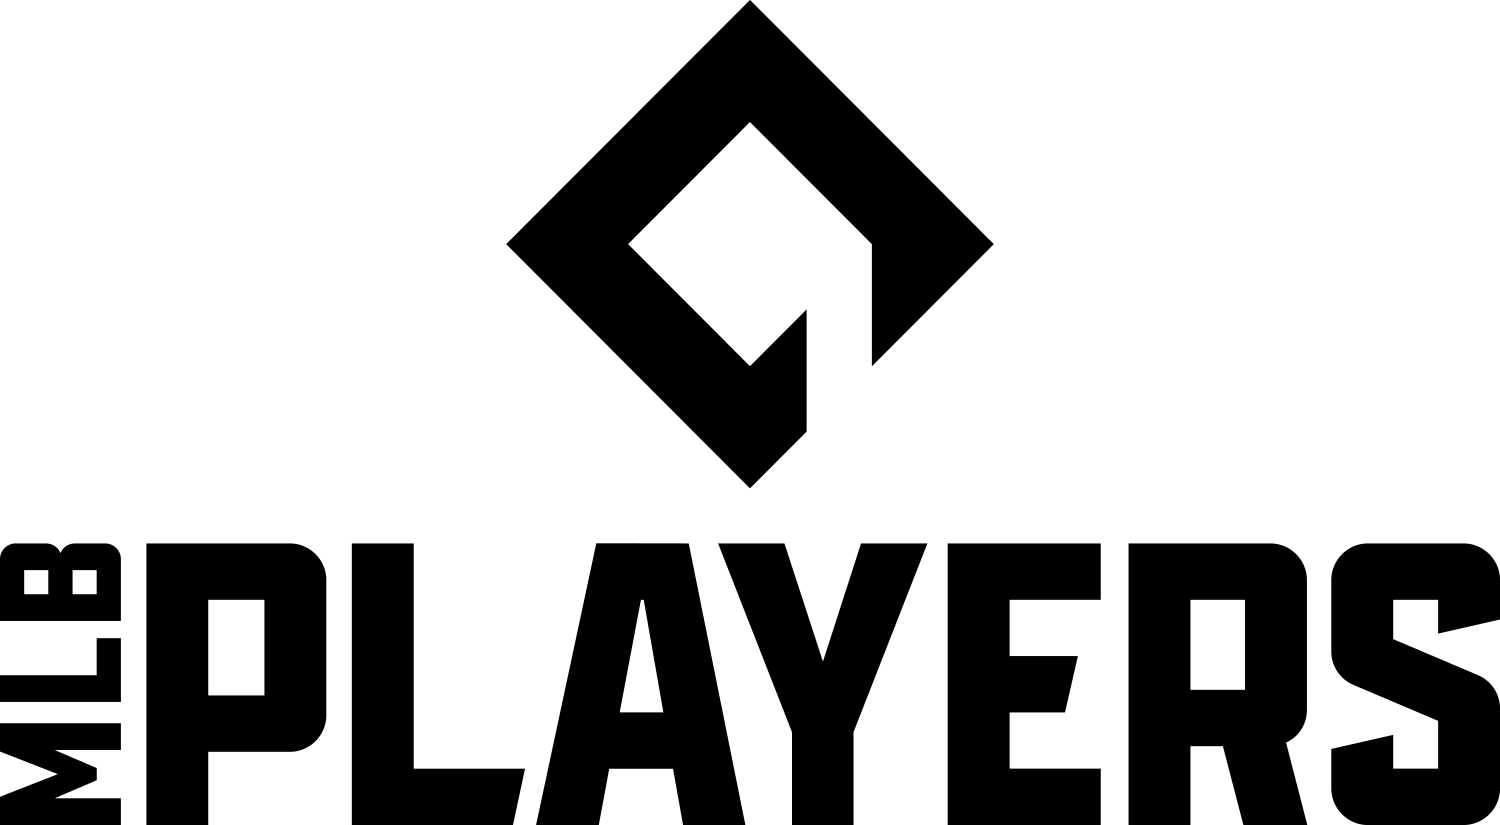 logotipo de mlb players